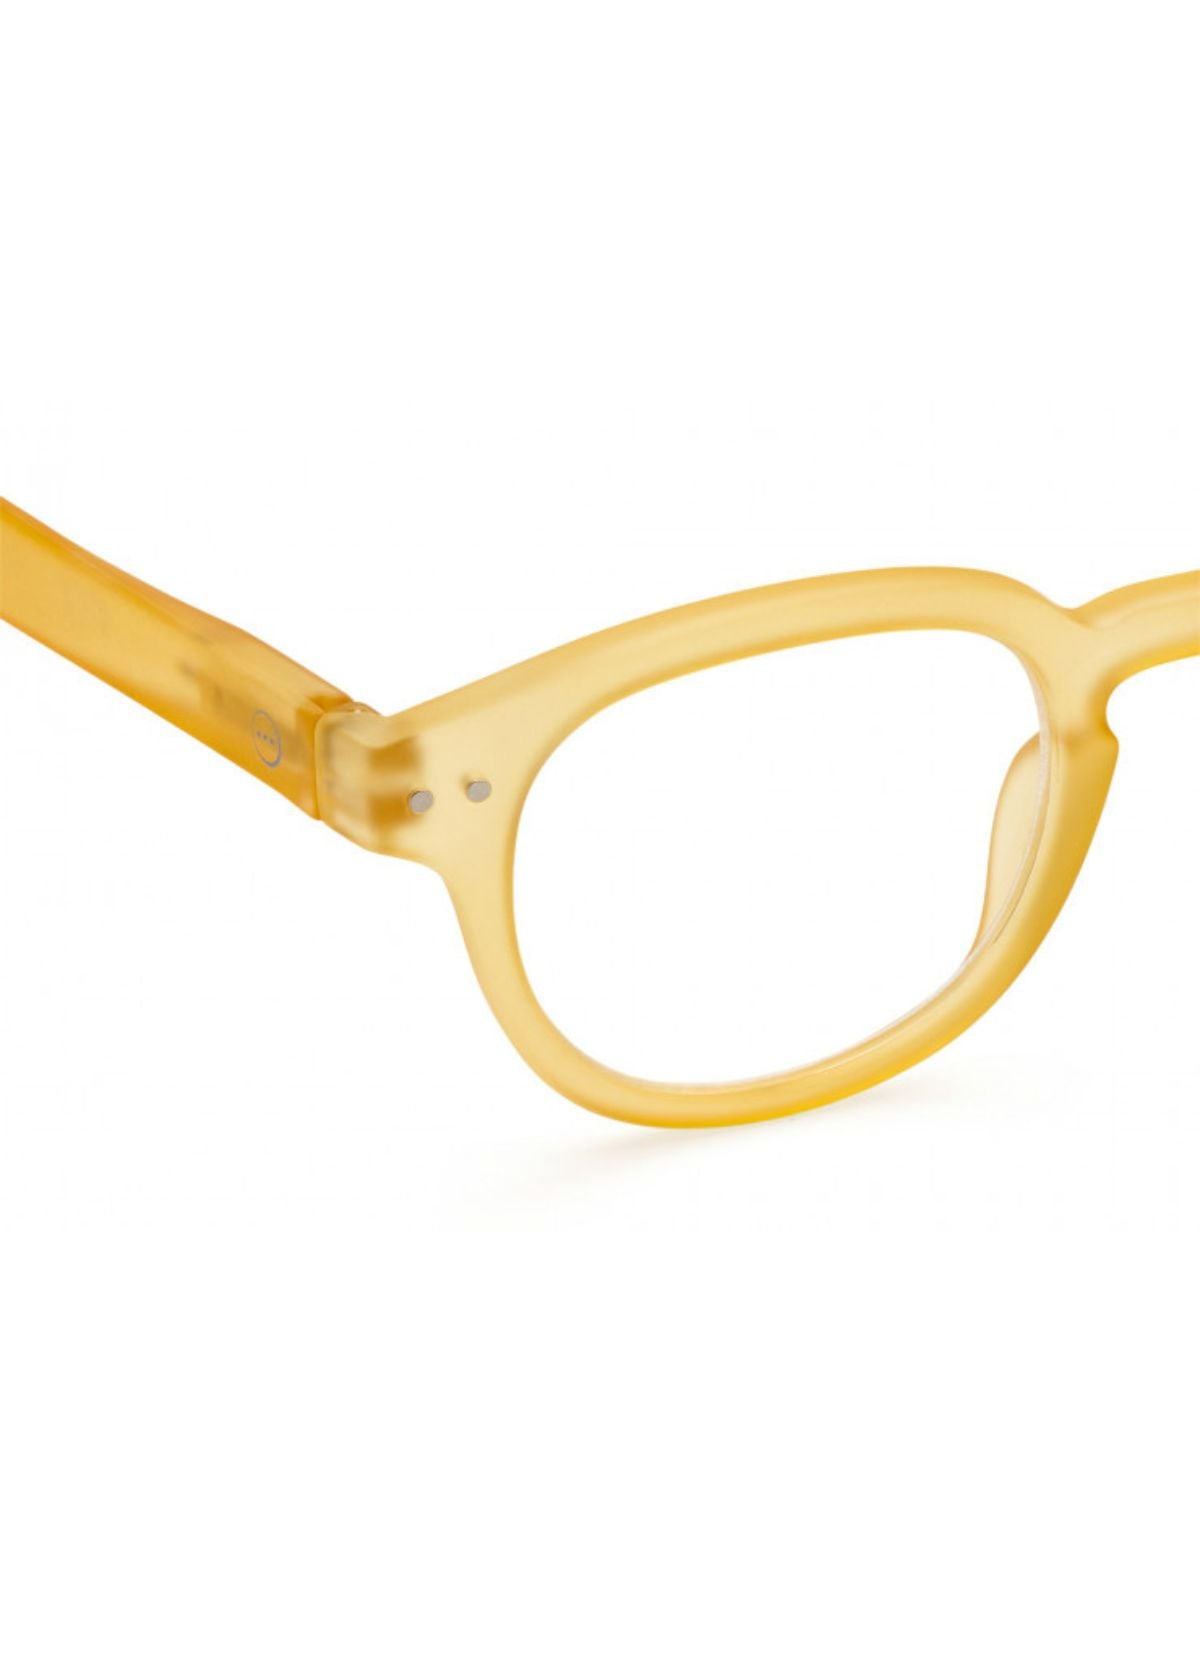 IZIPIZI Retro Square Reading Glasses #C in Yellow Honey